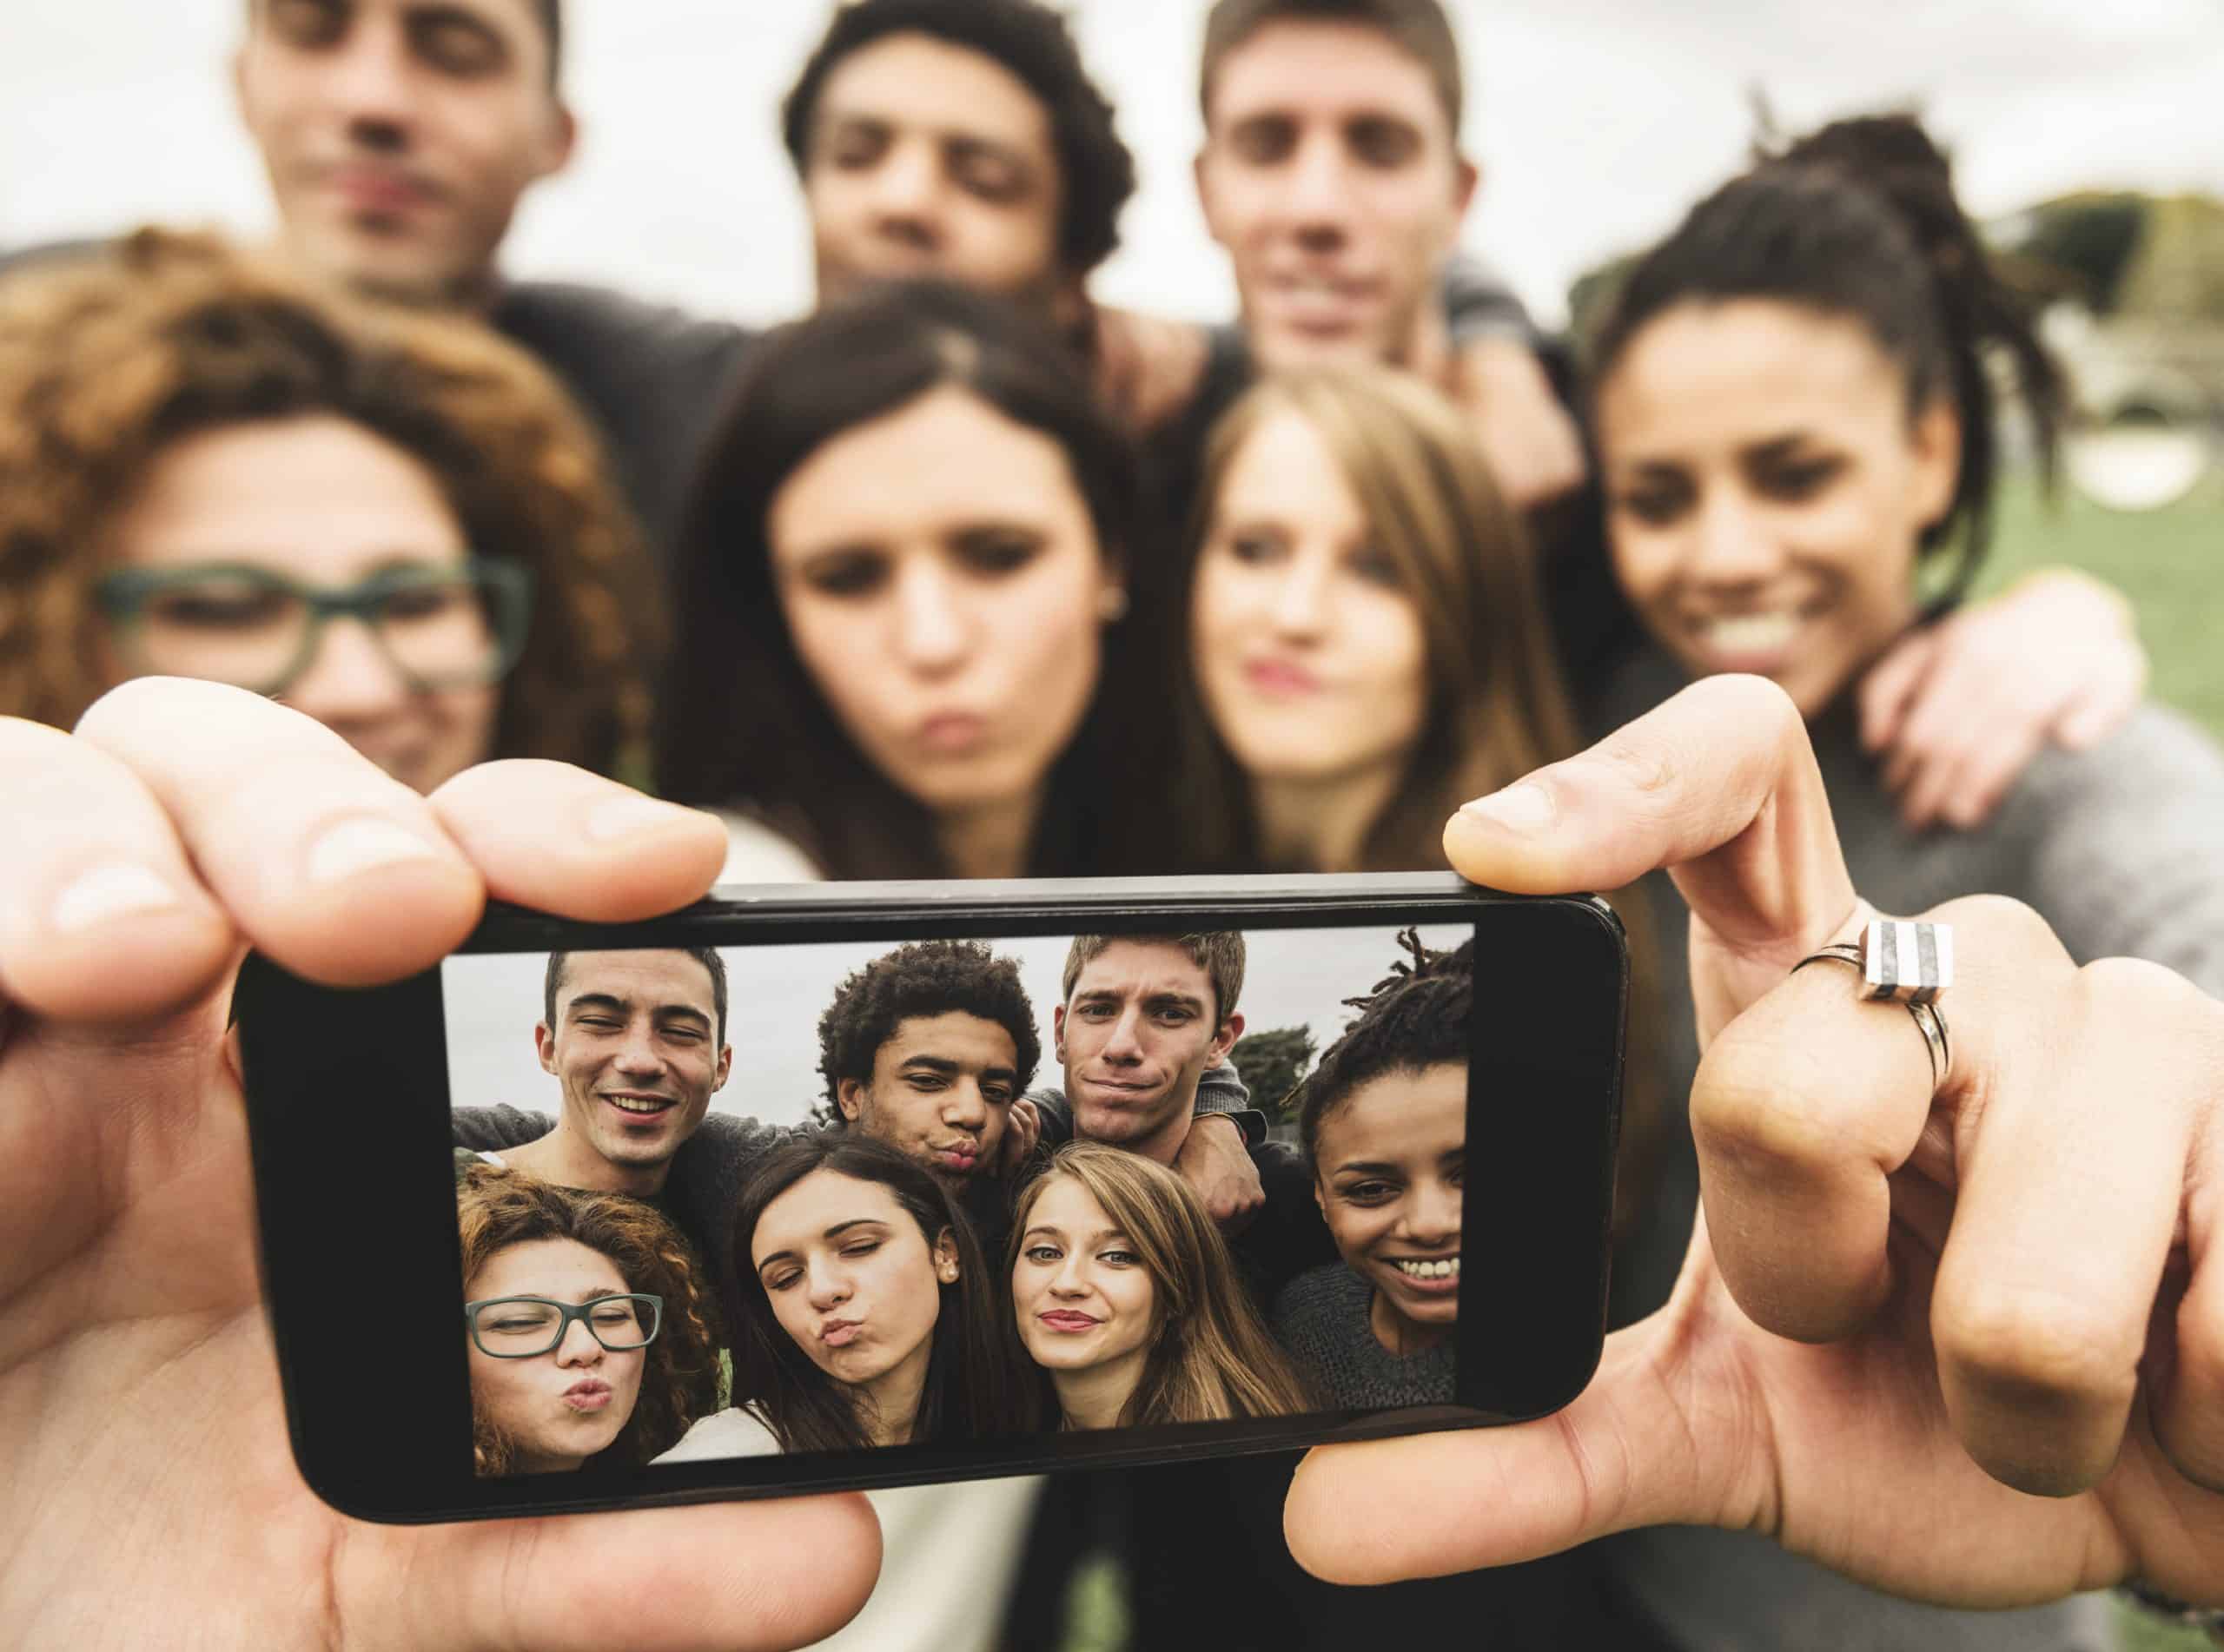 A millennial takes a selfie with other millennials.